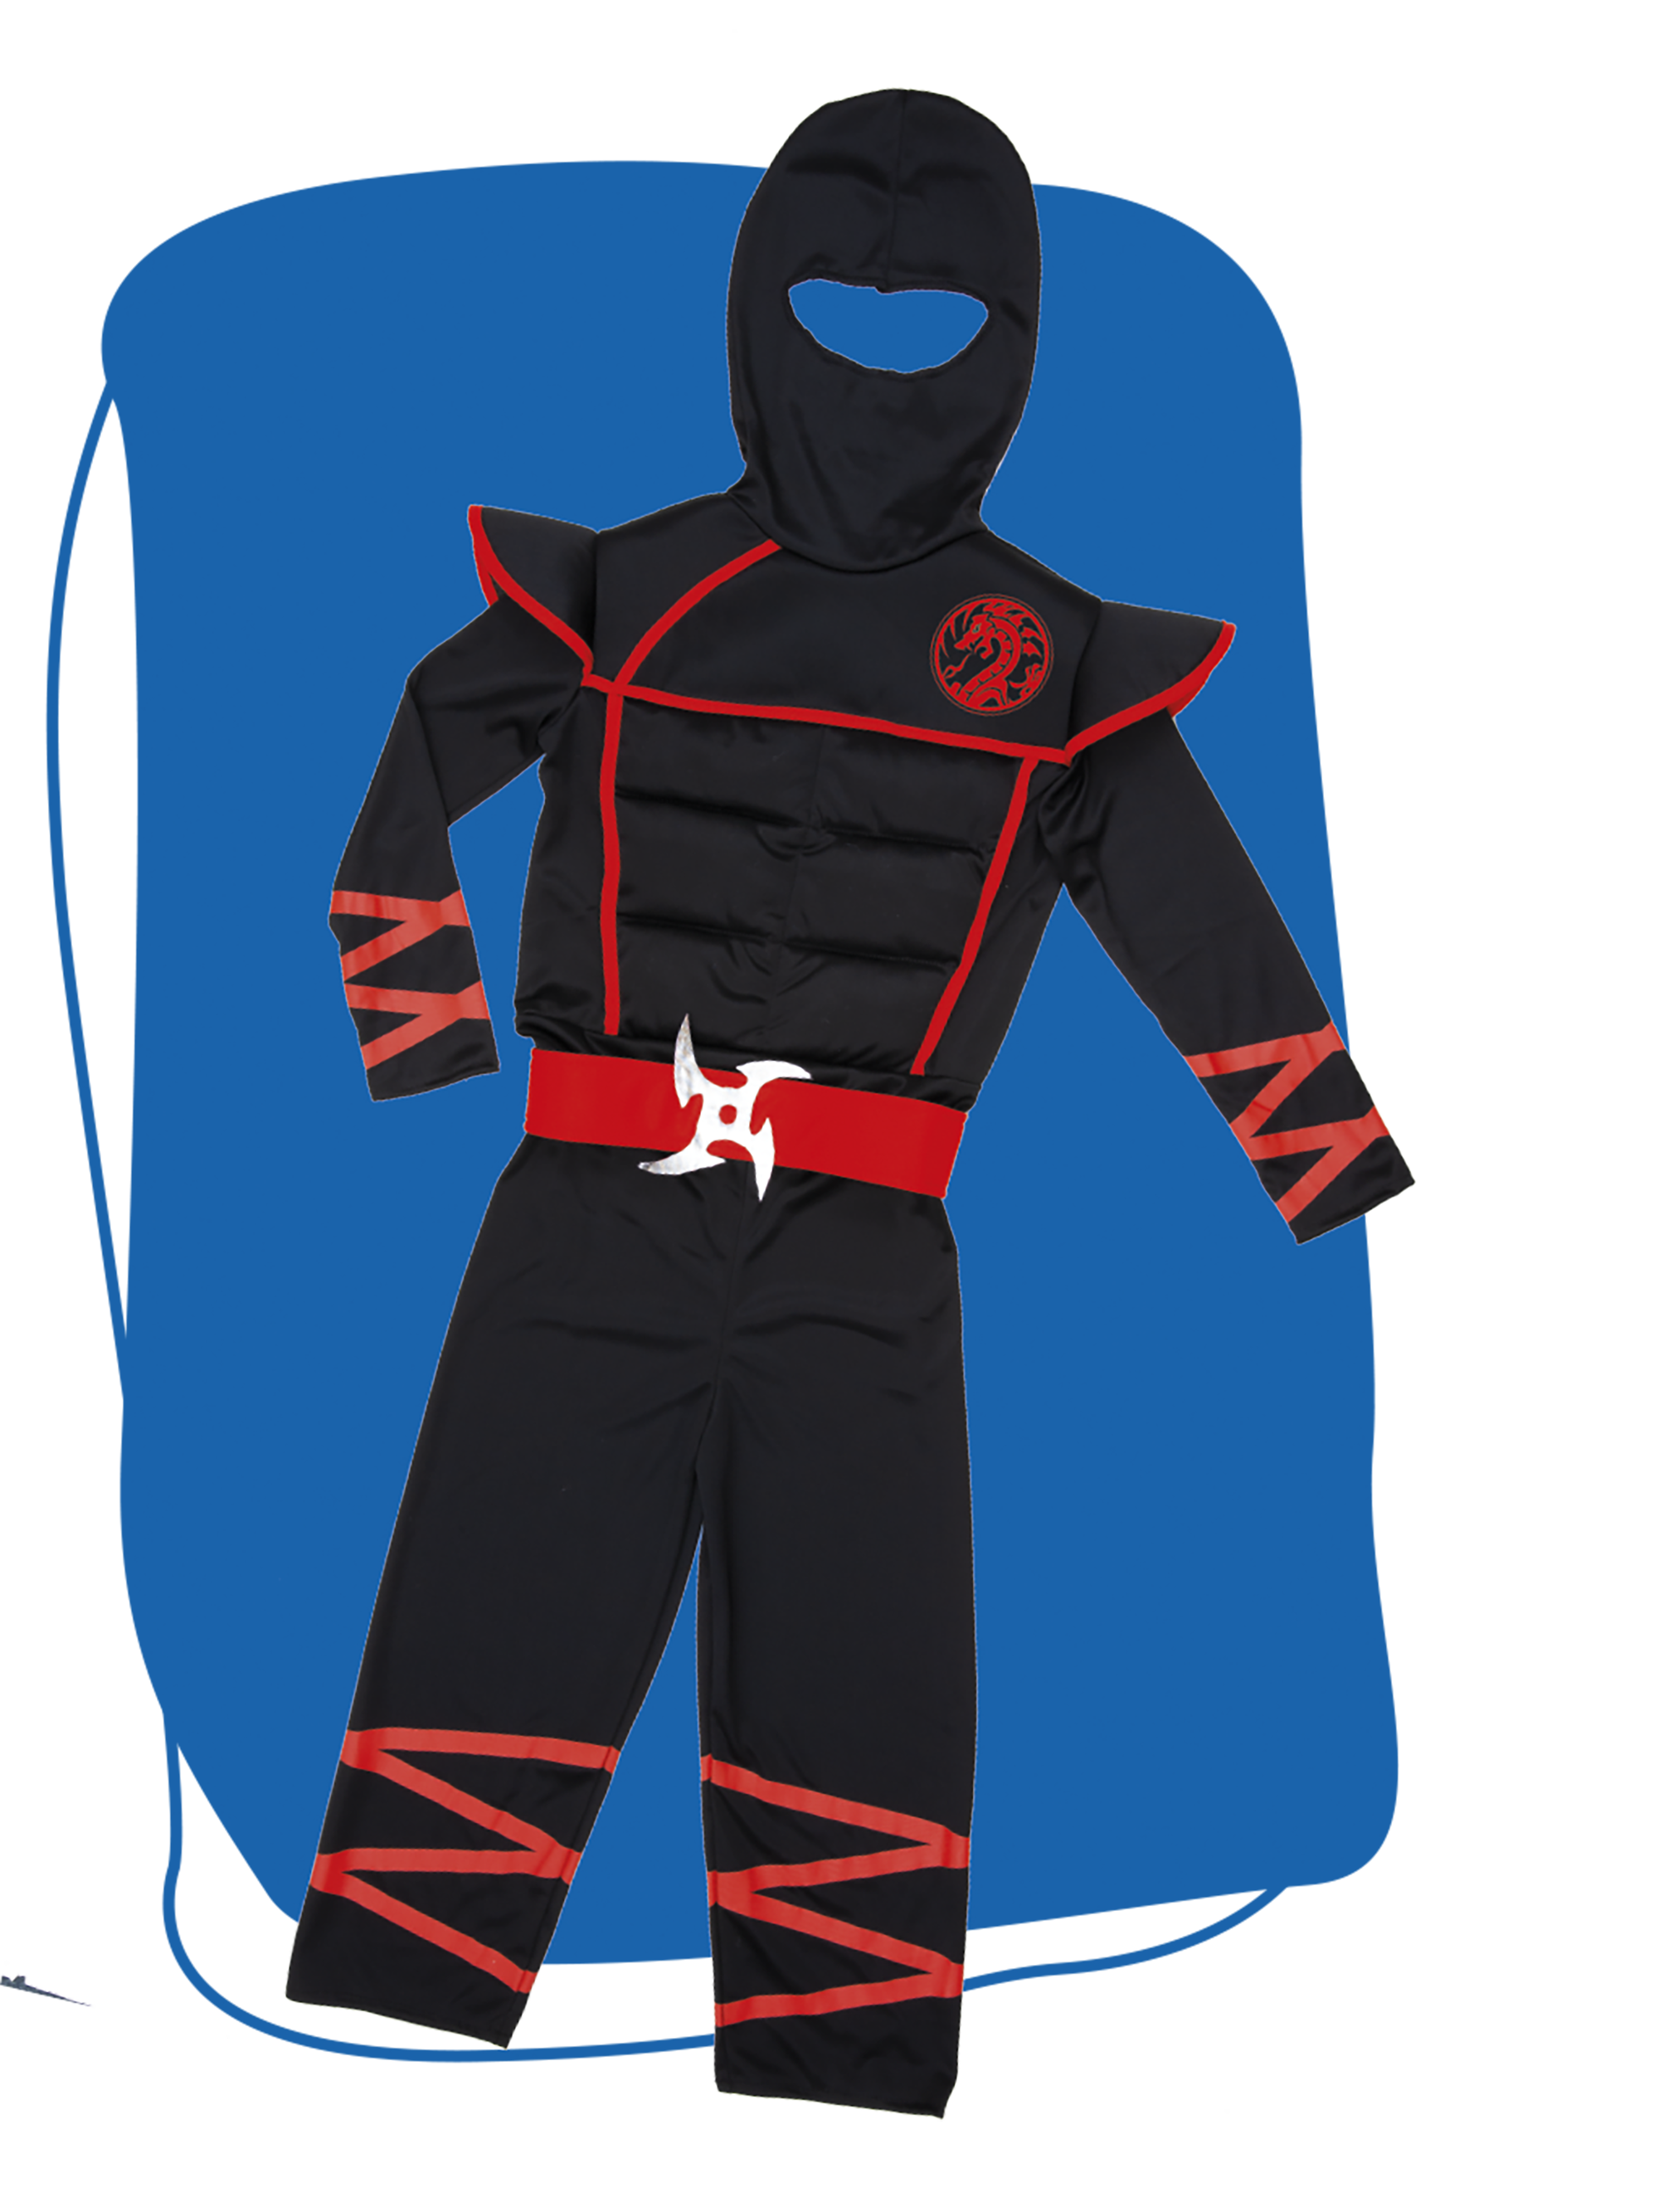 Costume da ninja - FANCY WORLD